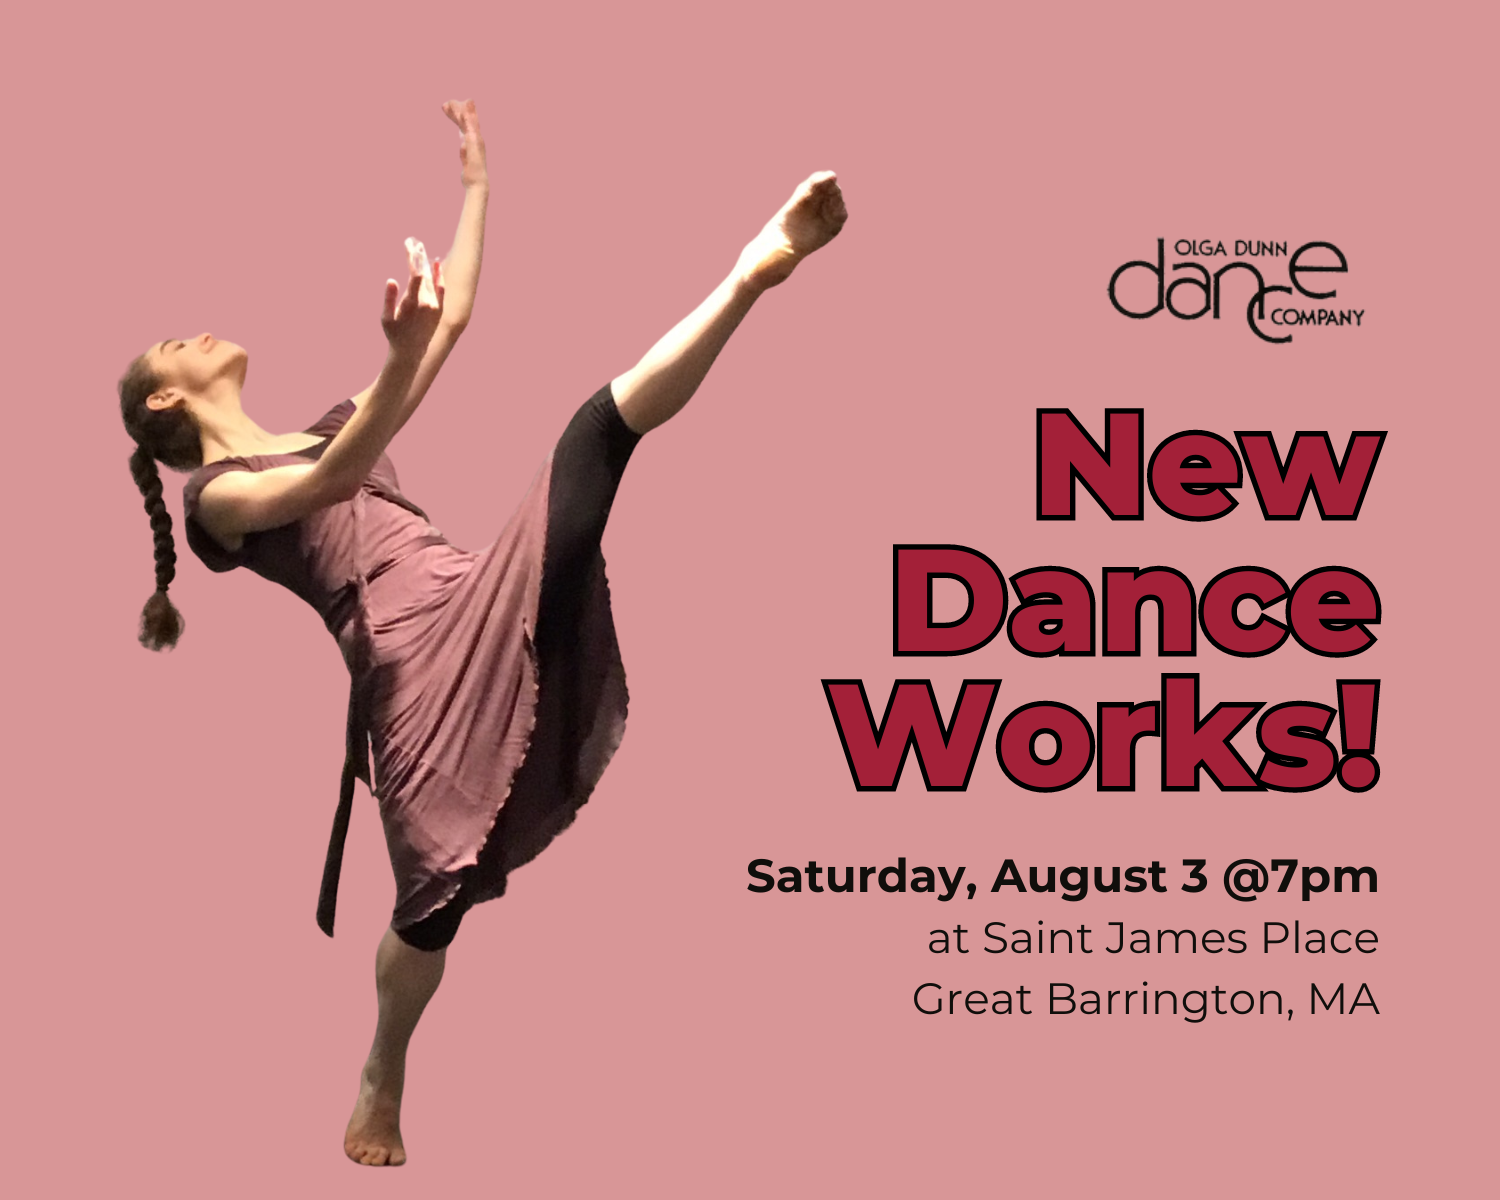 Olga Dunn Dance Company: New Dance Works!